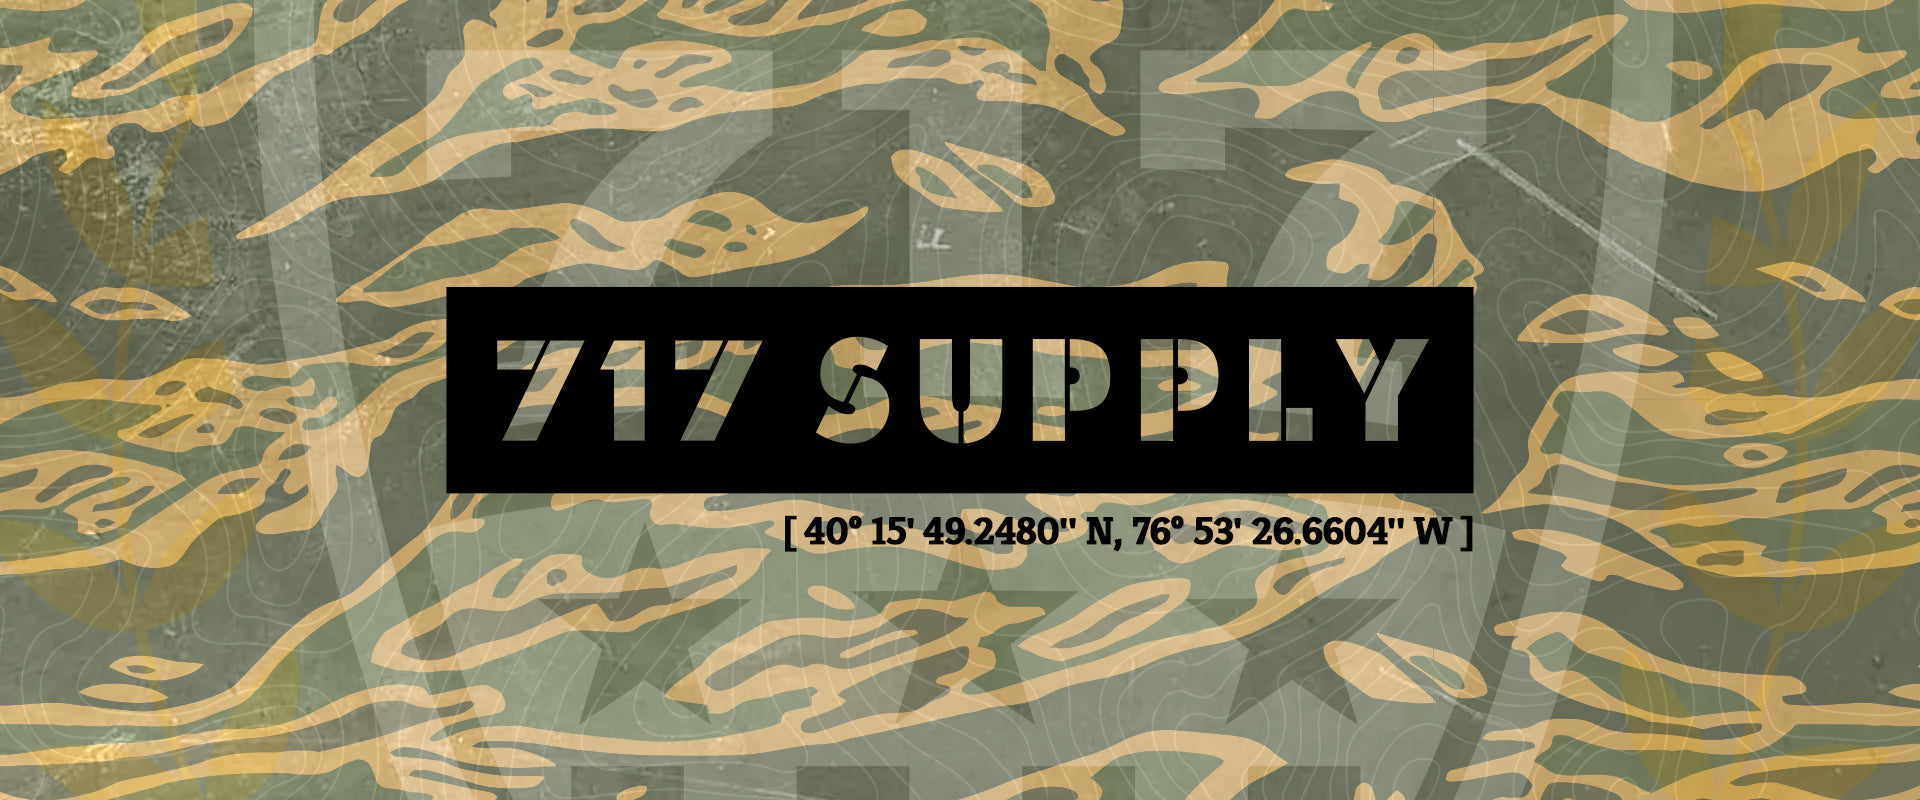 717 Supply